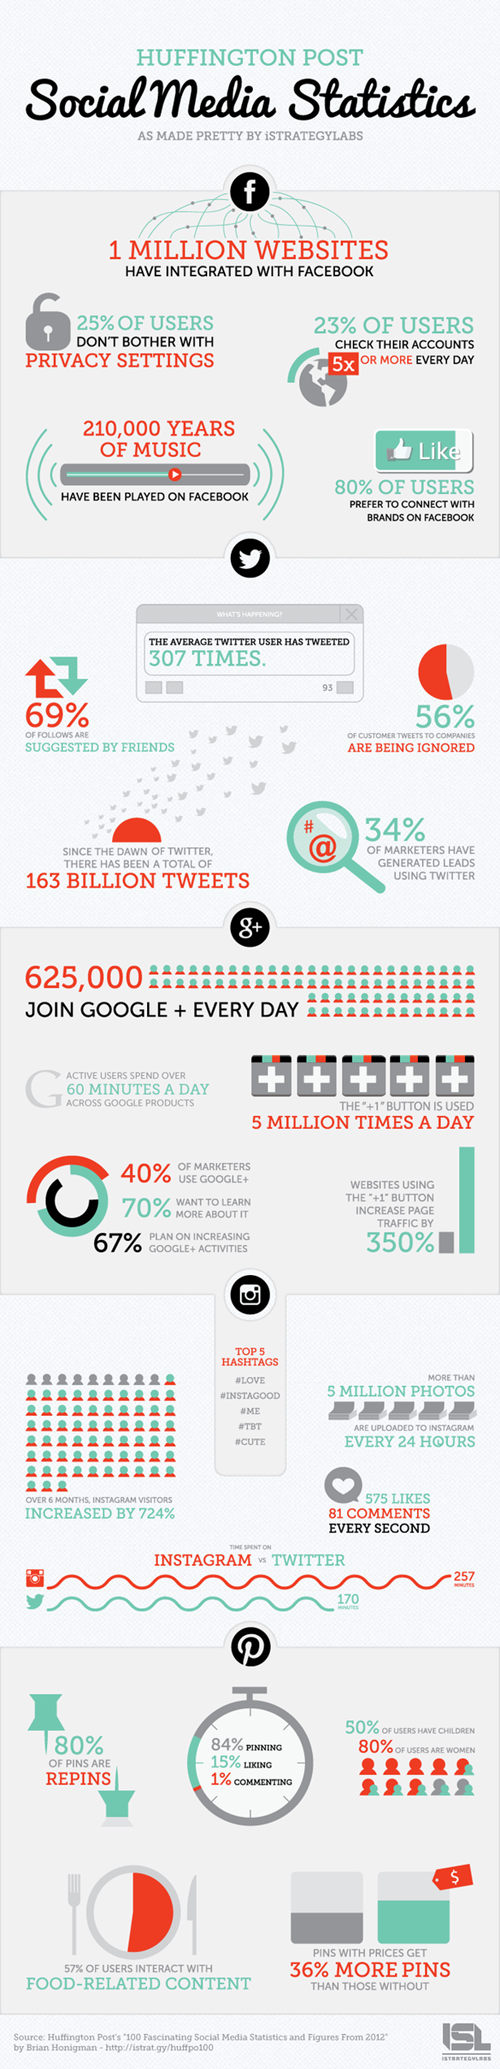 Social Media infographic 2012